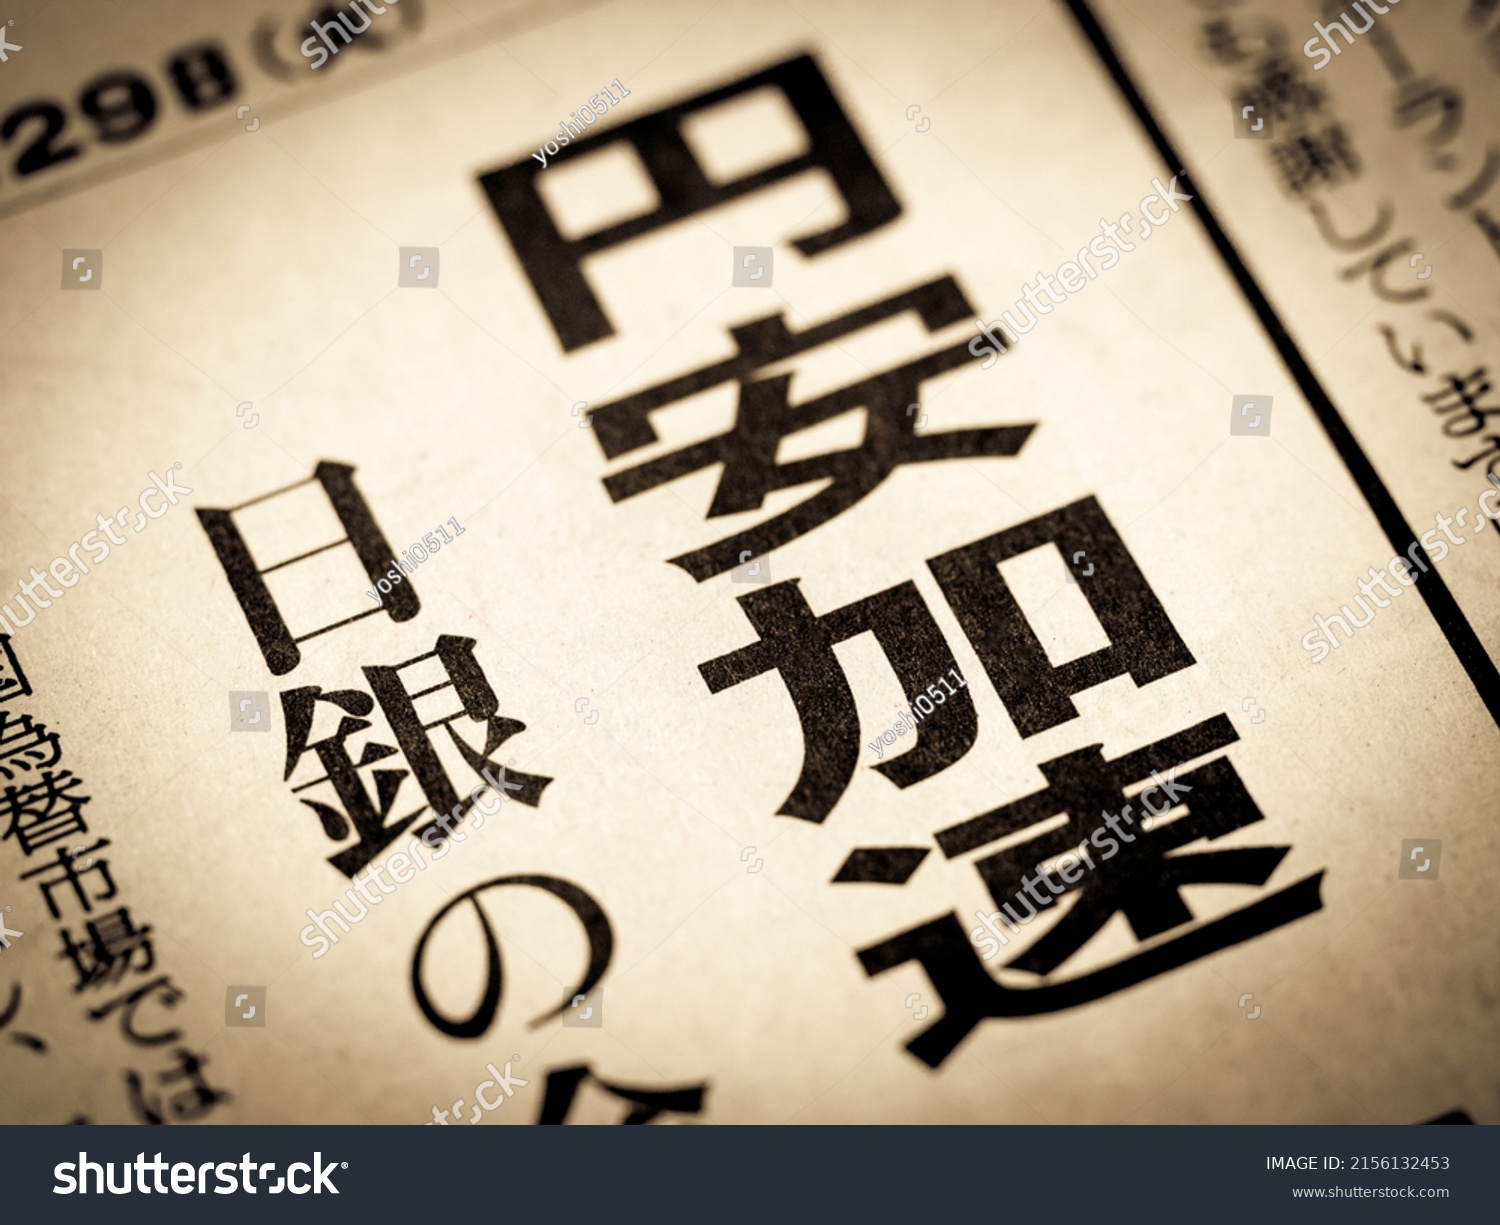 News headline that says "Accelerating yen depreciation, Bank of Japan" in Japanese #2156132453